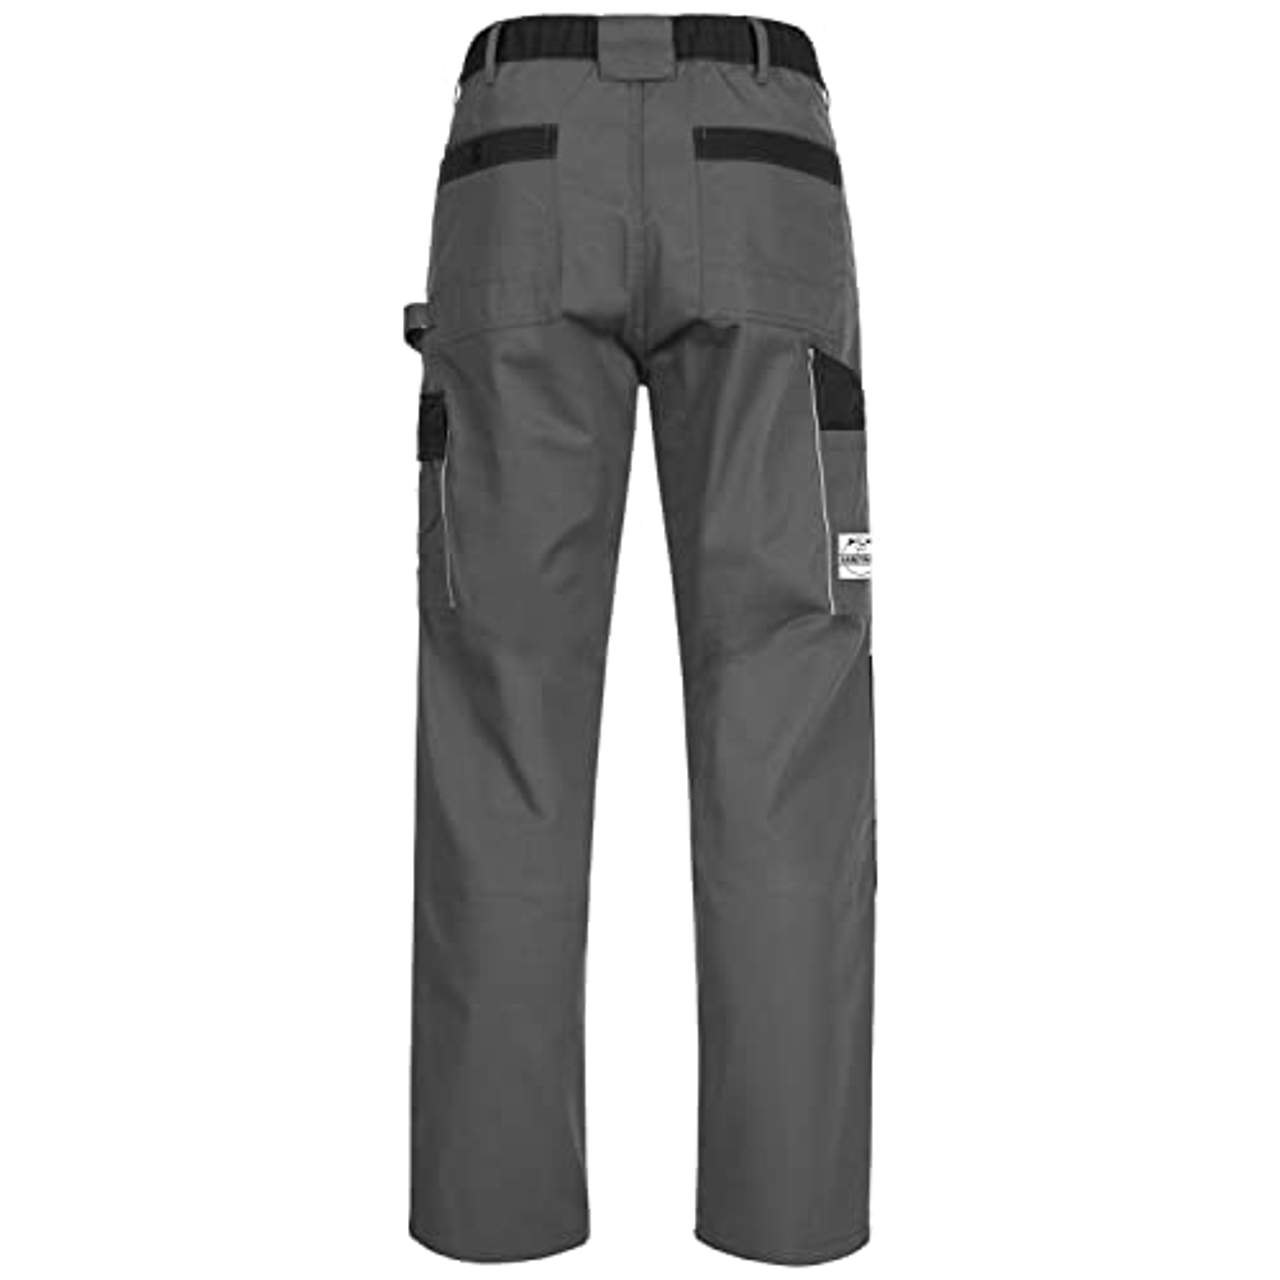 ACE Handyman Arbeits-Hosen für Männer